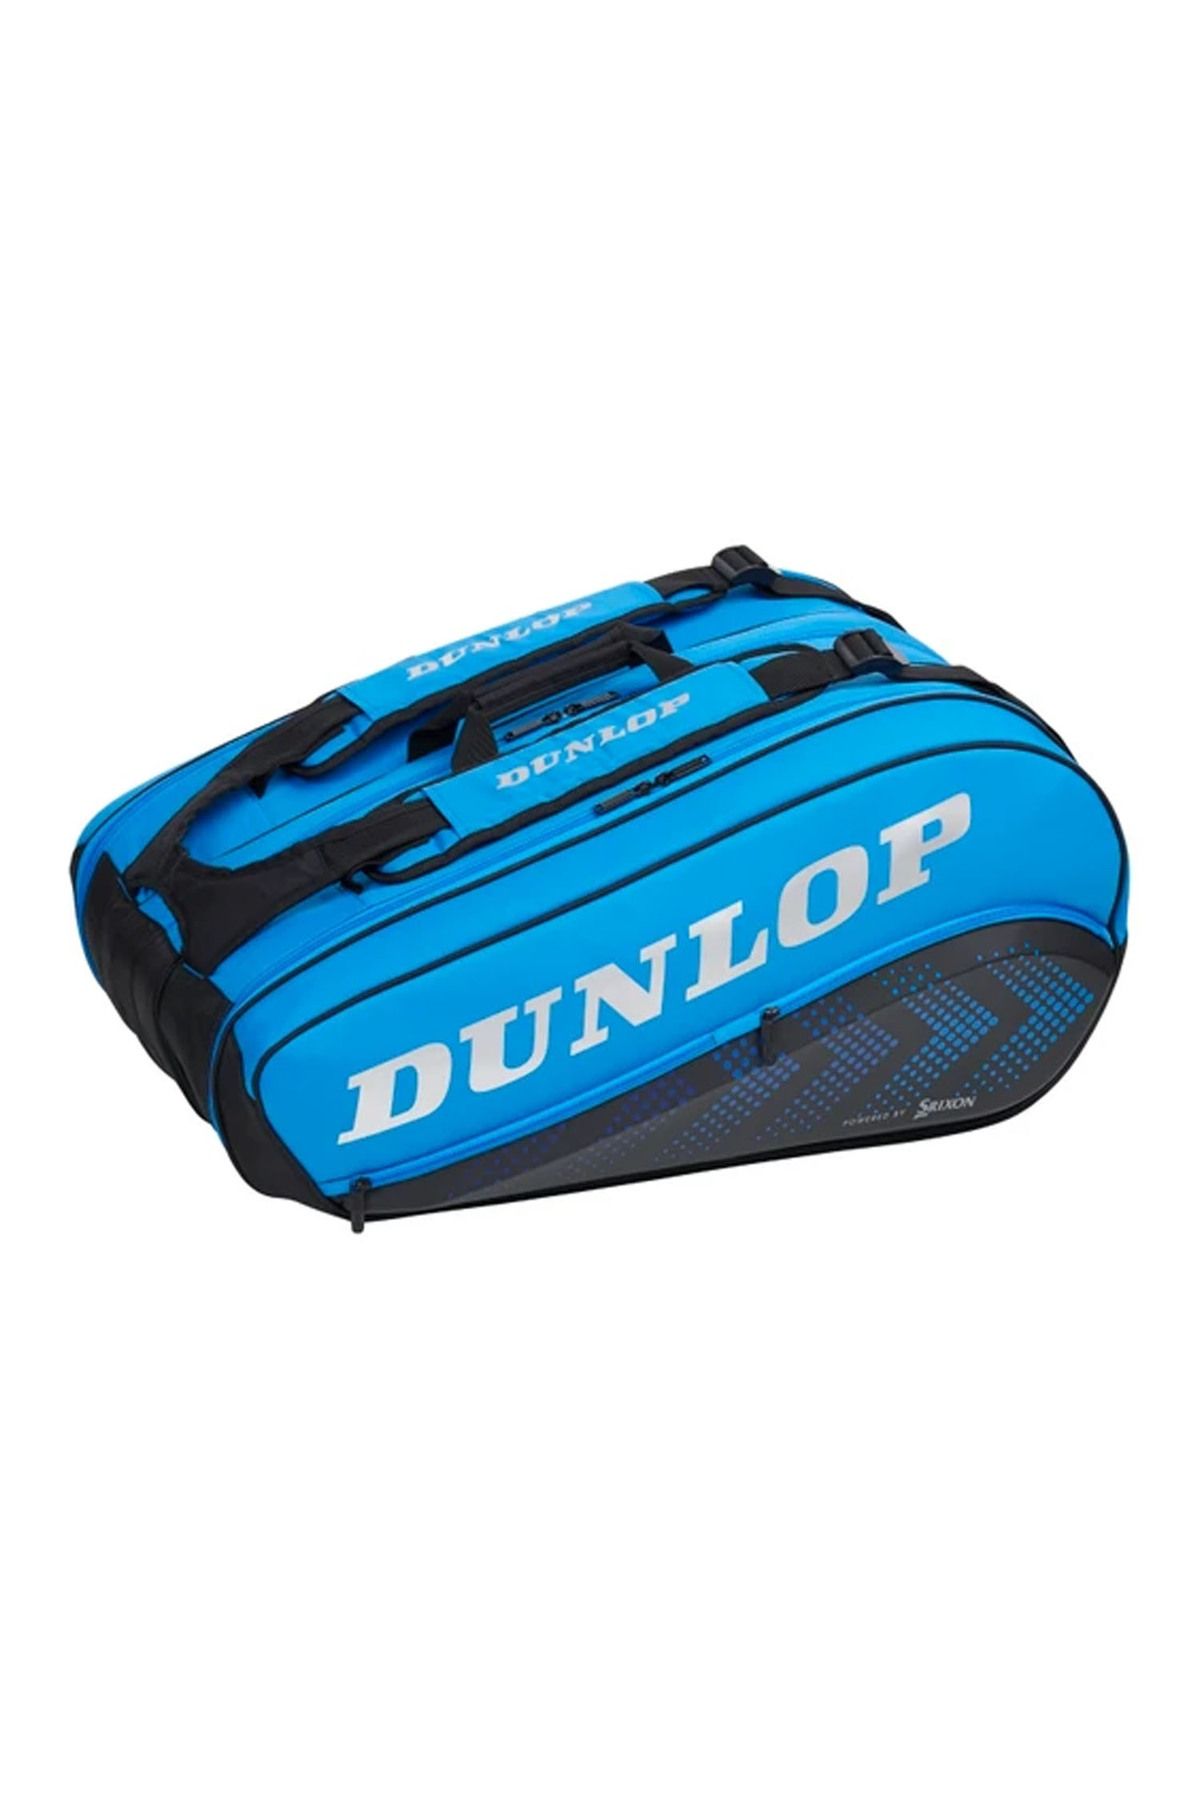 Dunlop D TAC FX-PERFORMANCE 12RKT THERMO